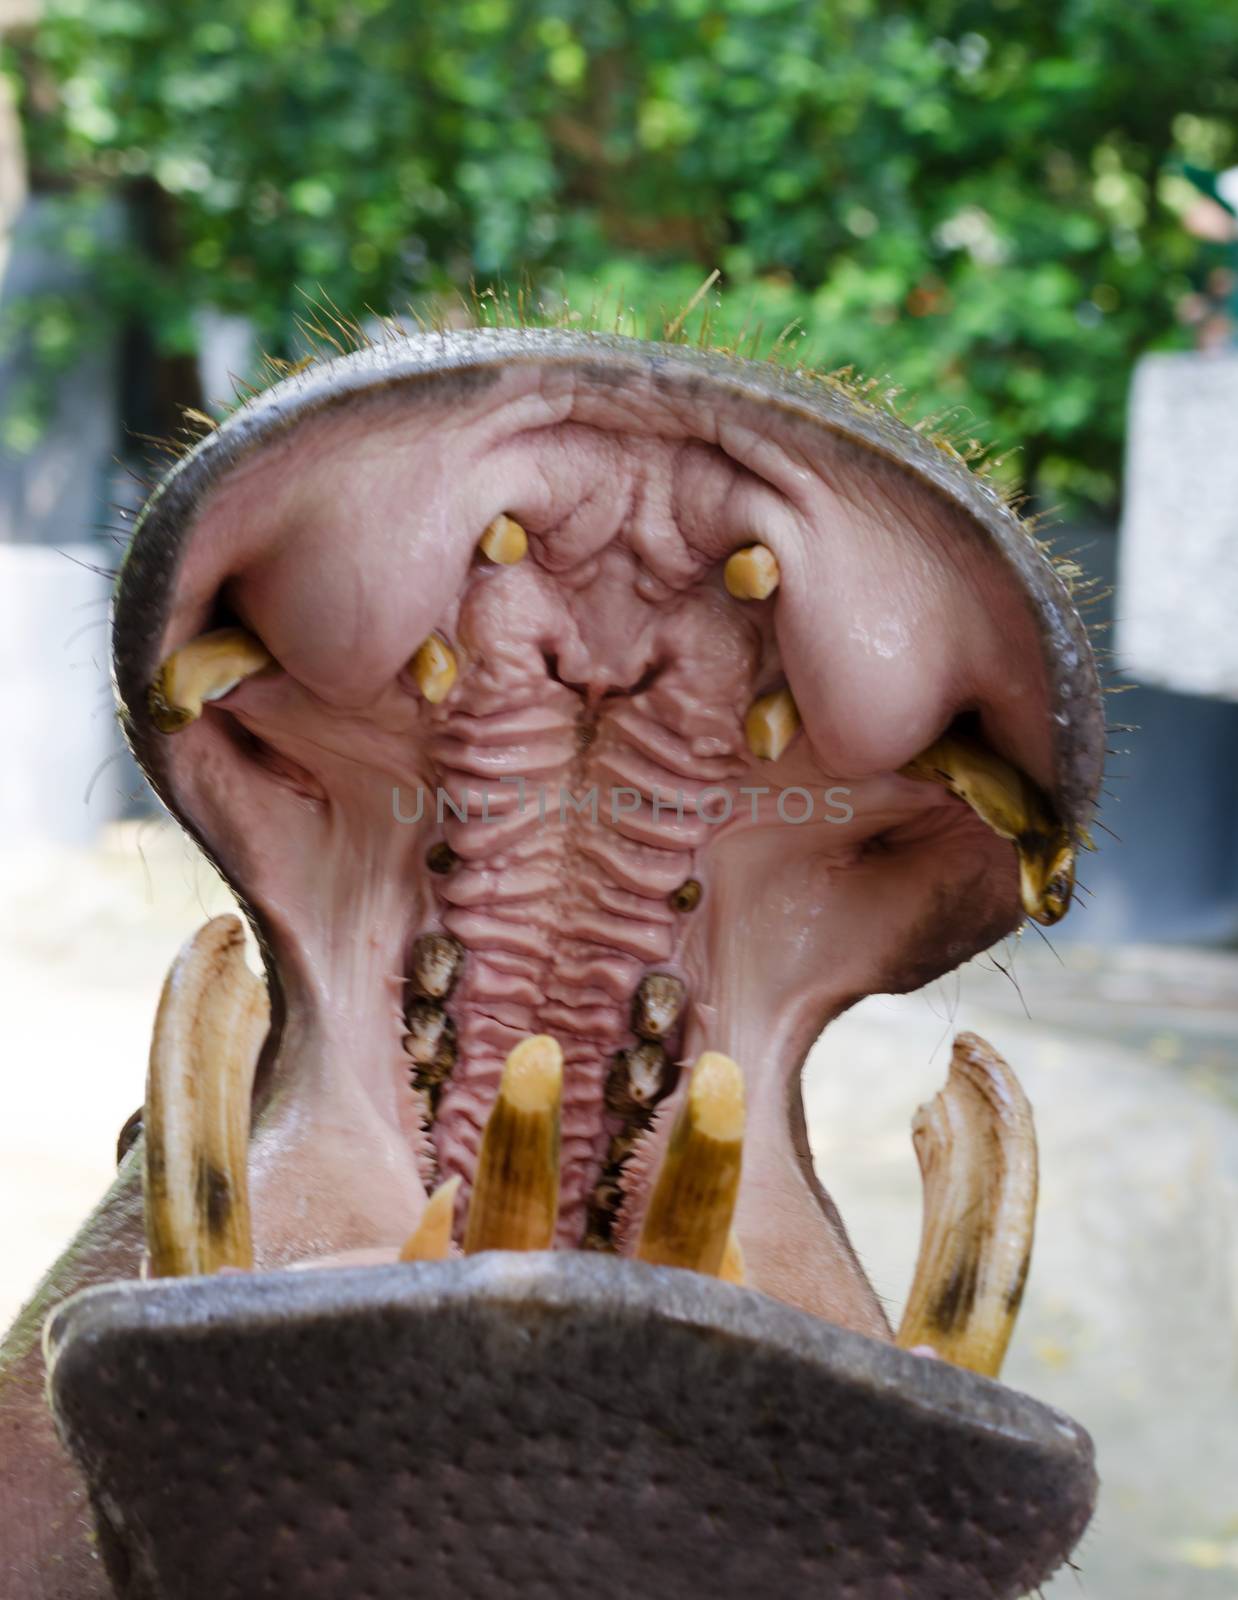 Hippopotamus open mouth by siraanamwong